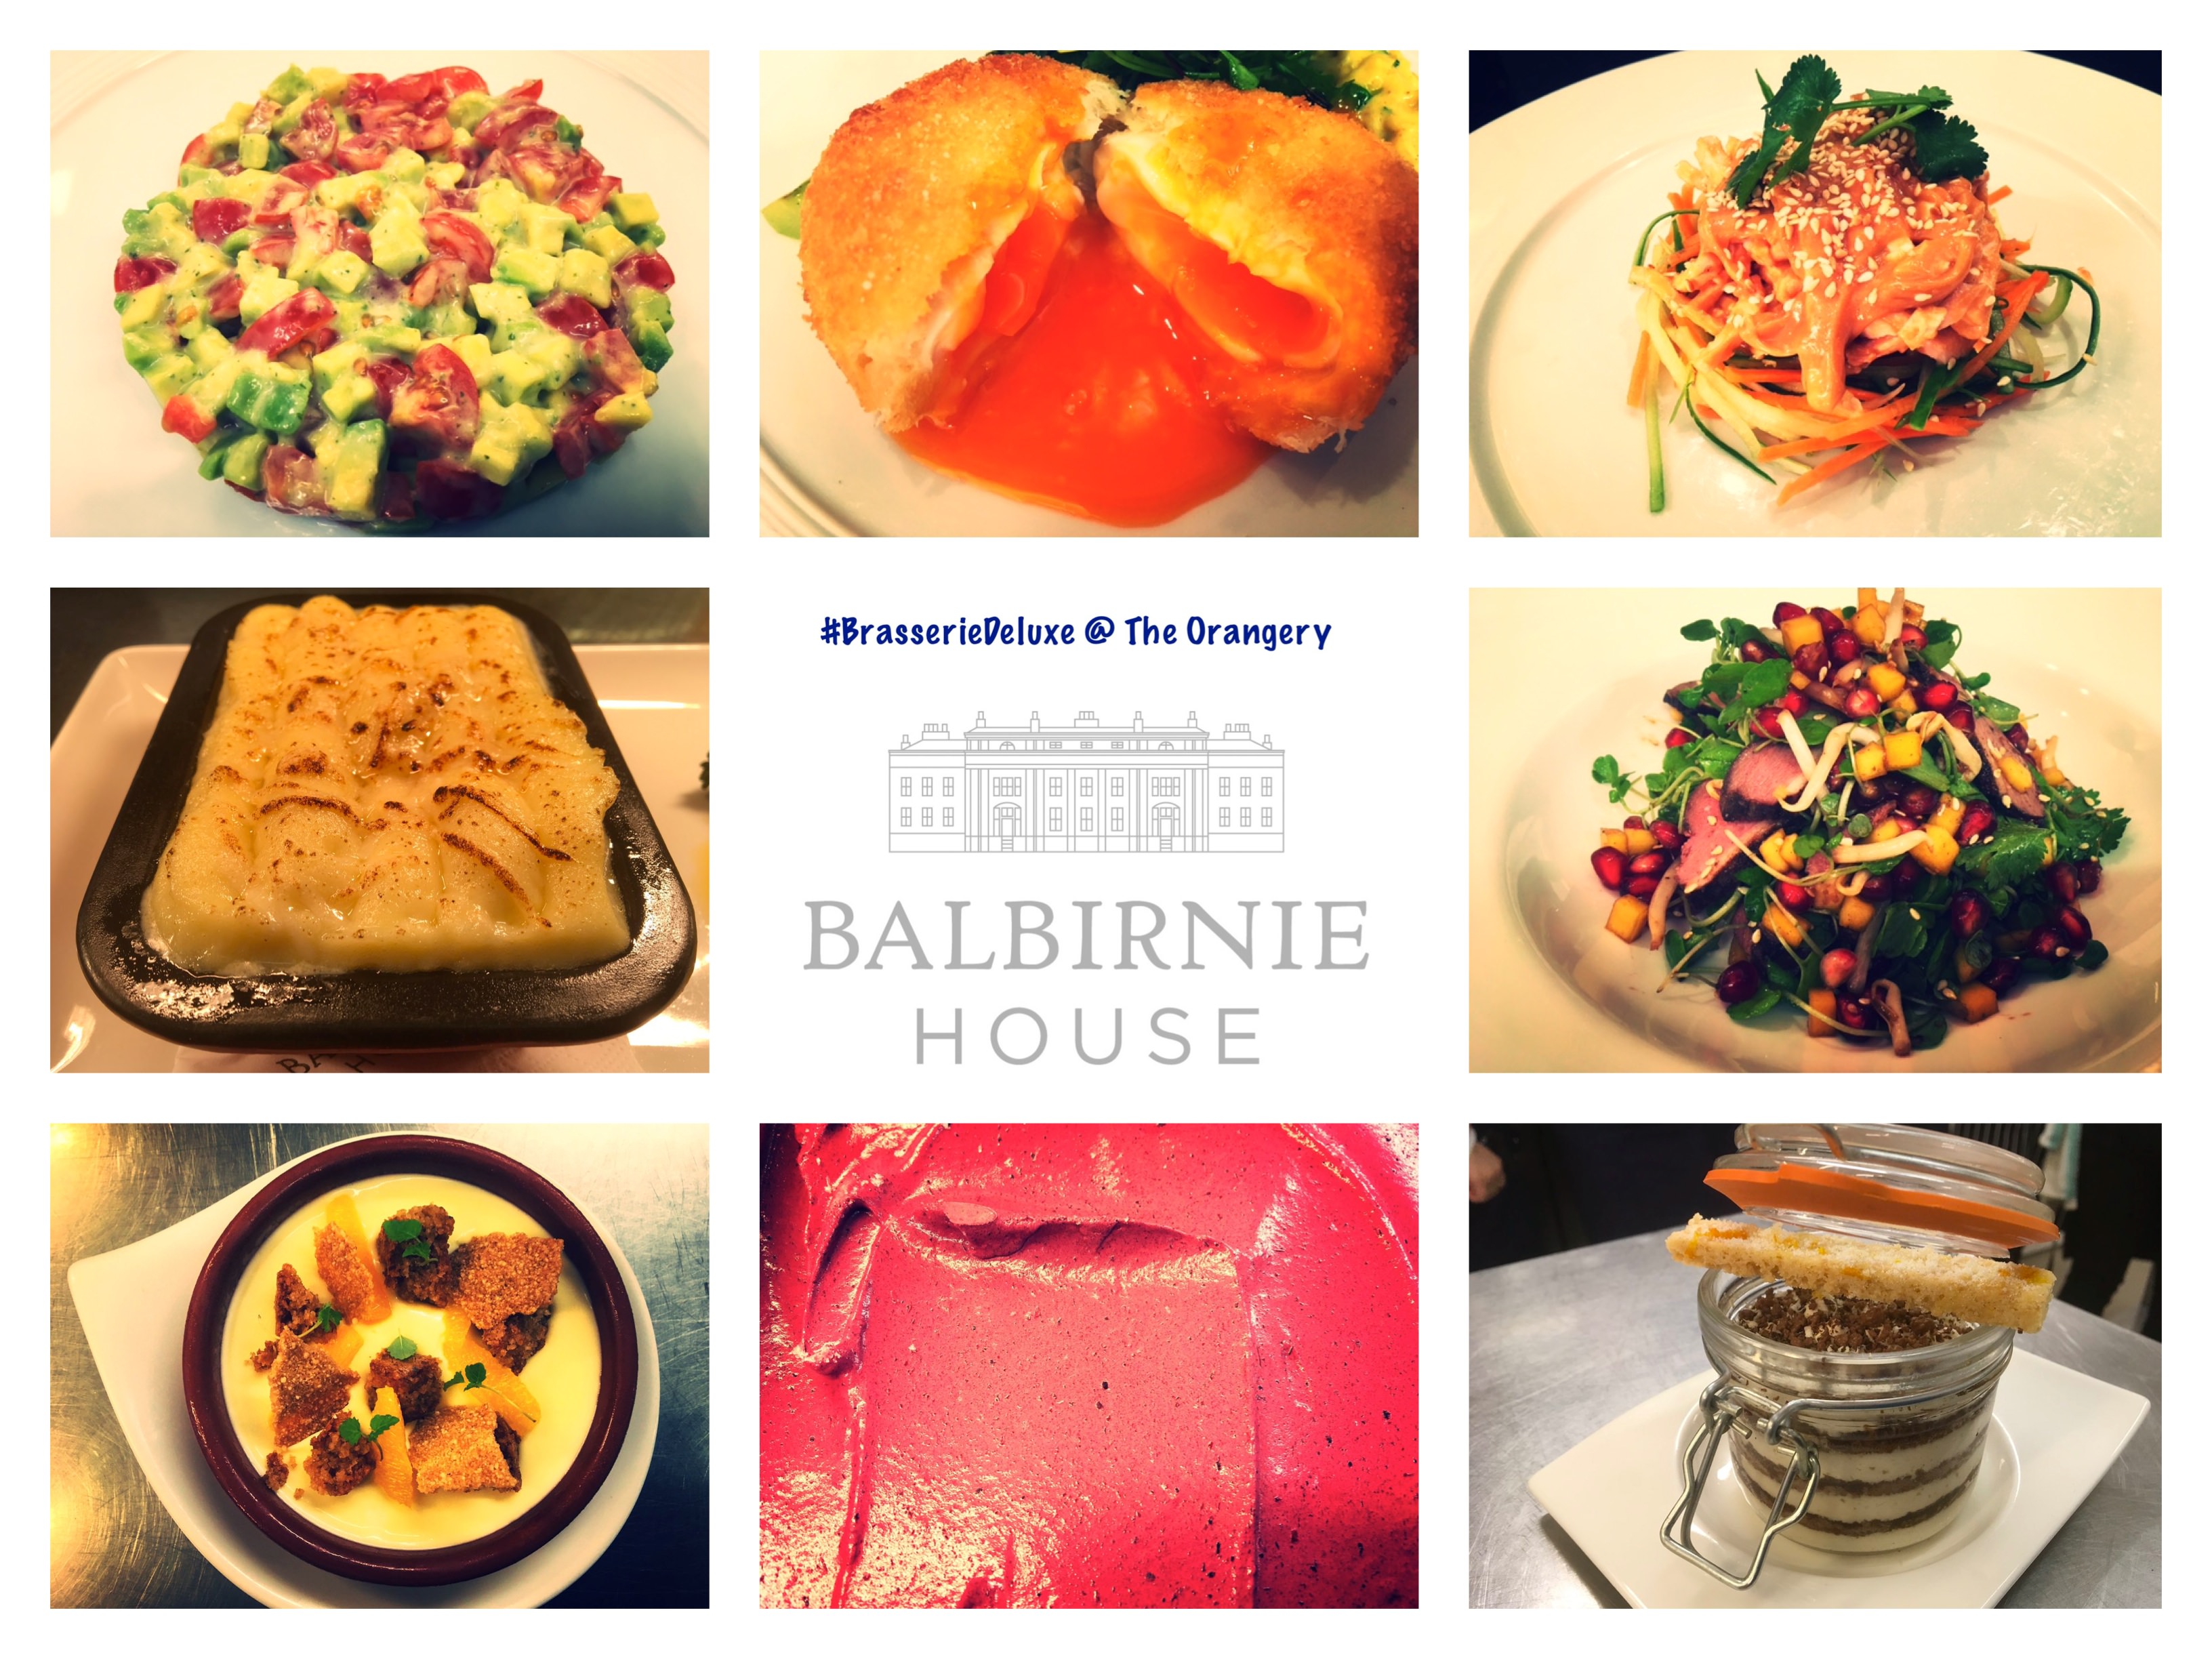 Dining at Balbirnie House